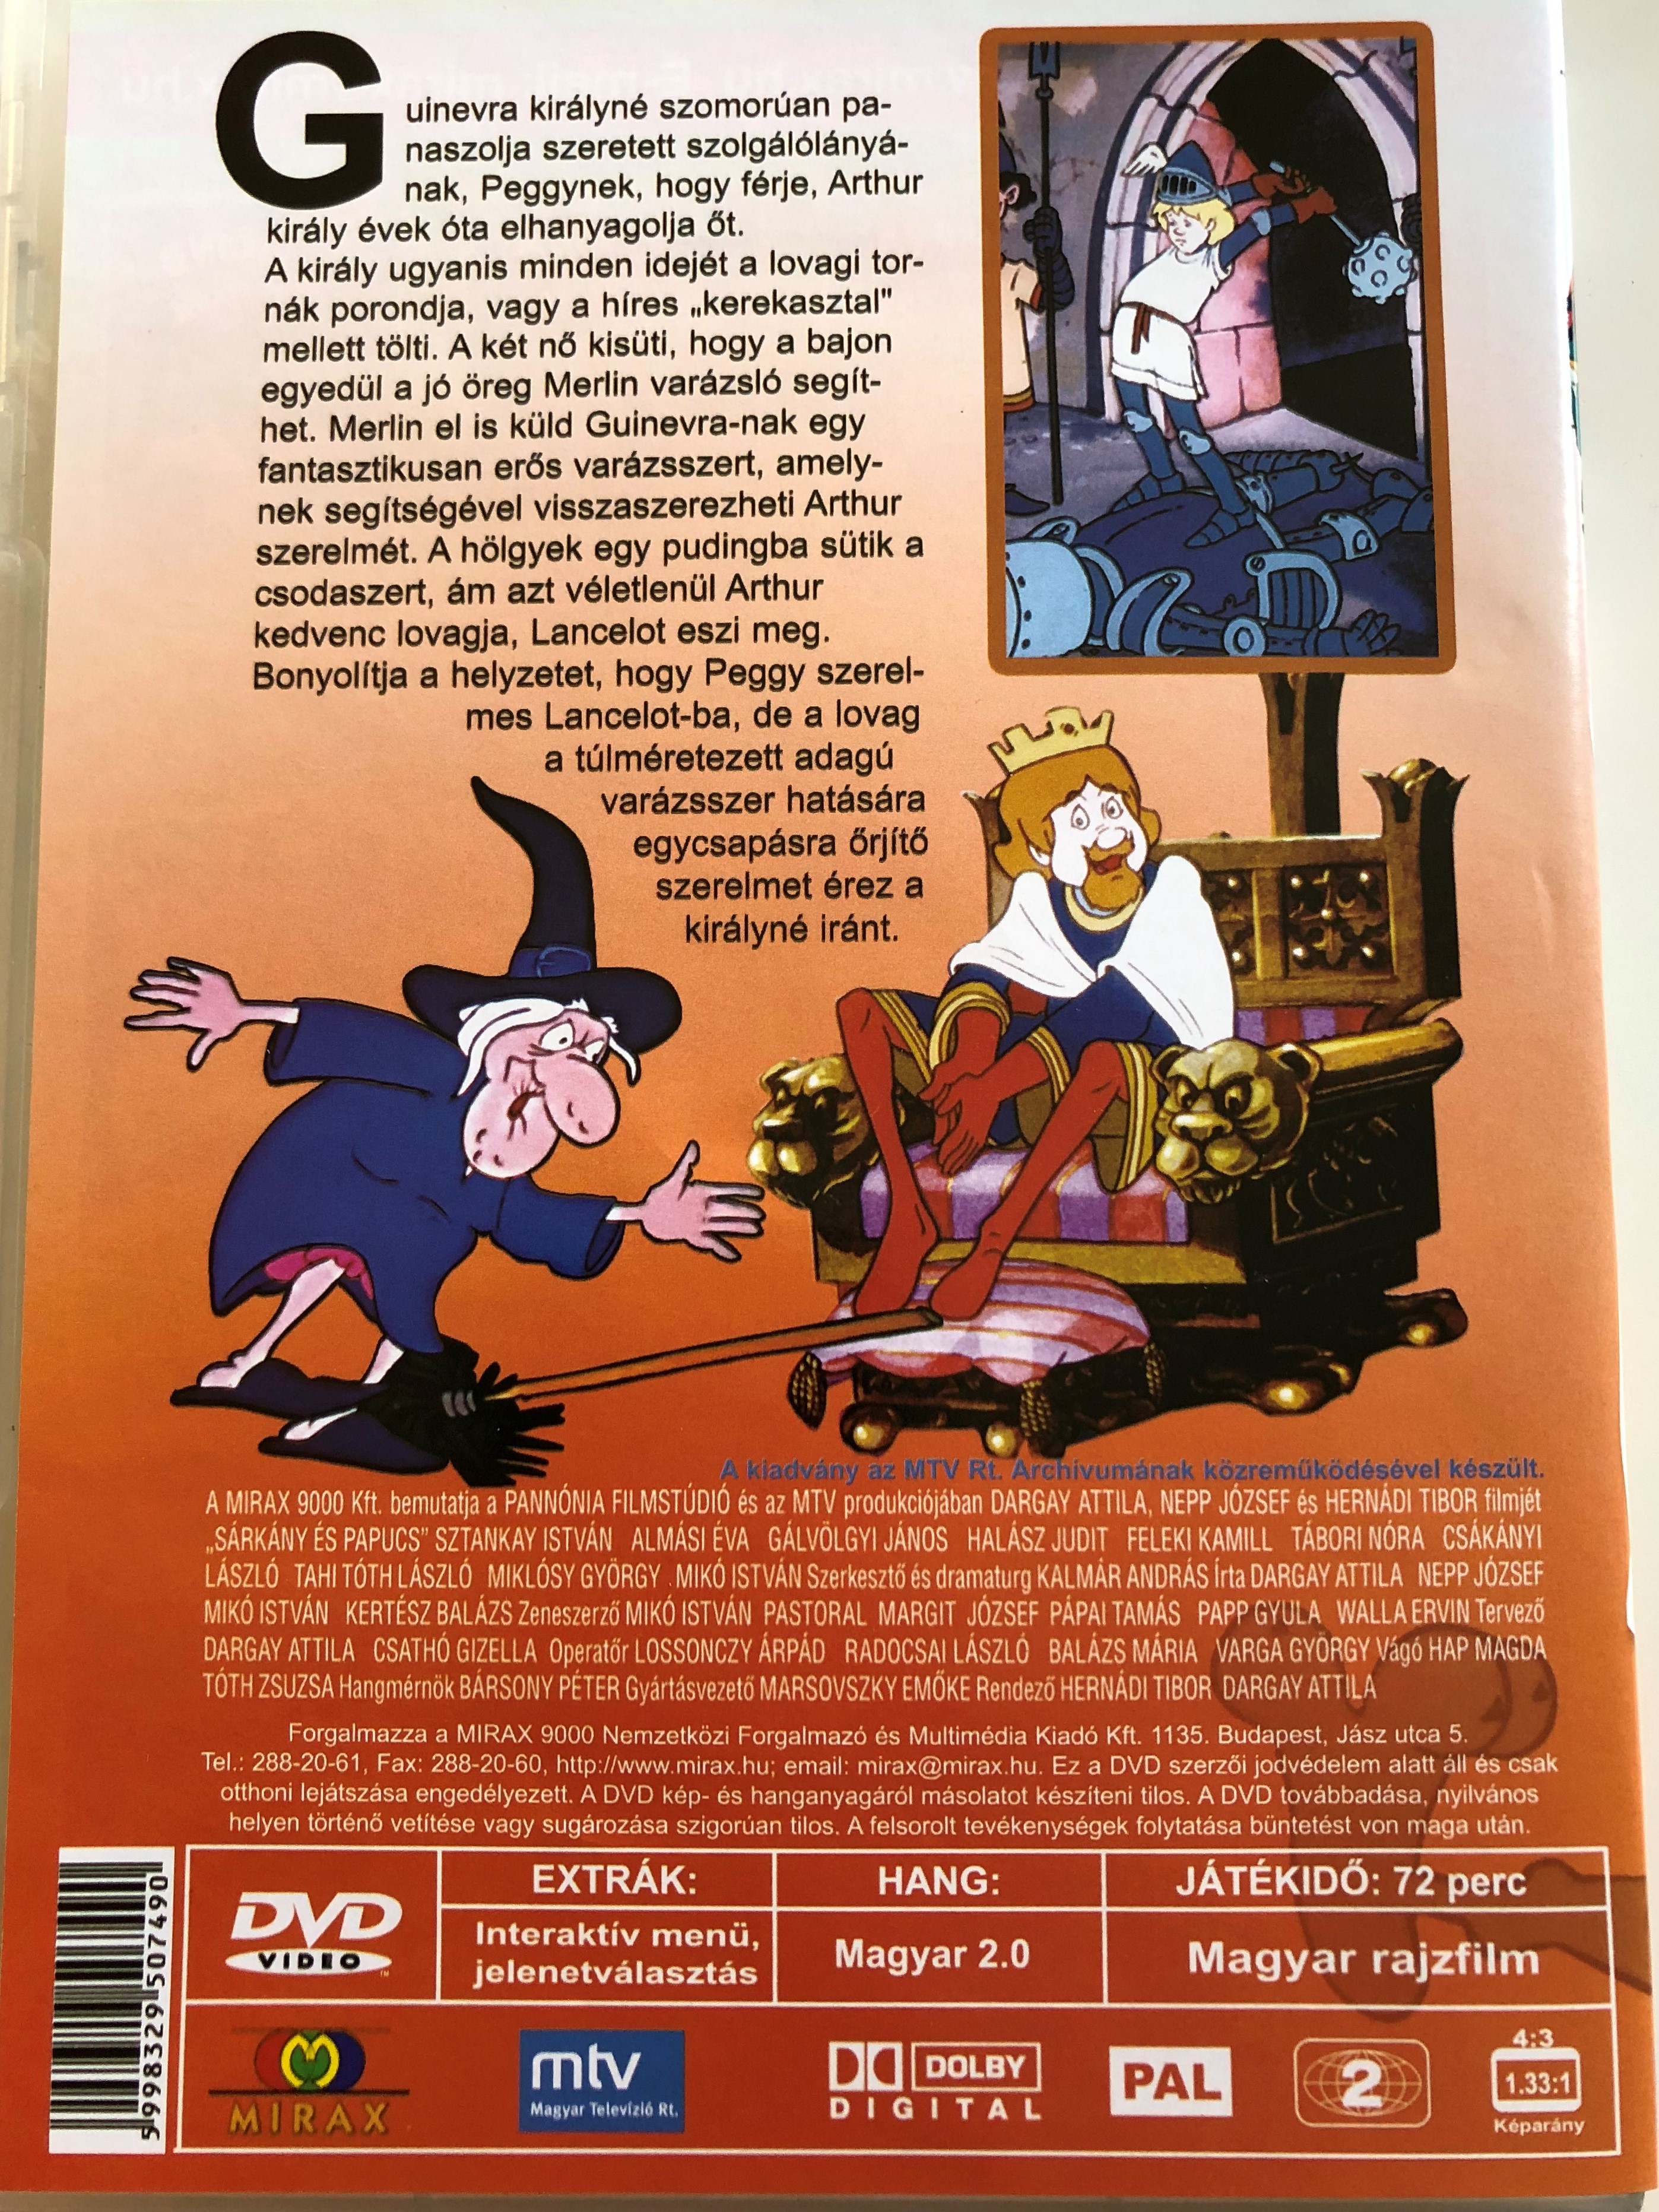 s-rk-ny-s-papucs-dvd-1989-dragon-slippers-hungarian-cartoon-directed-by-hern-di-tibor-dargay-attila-3.jpg